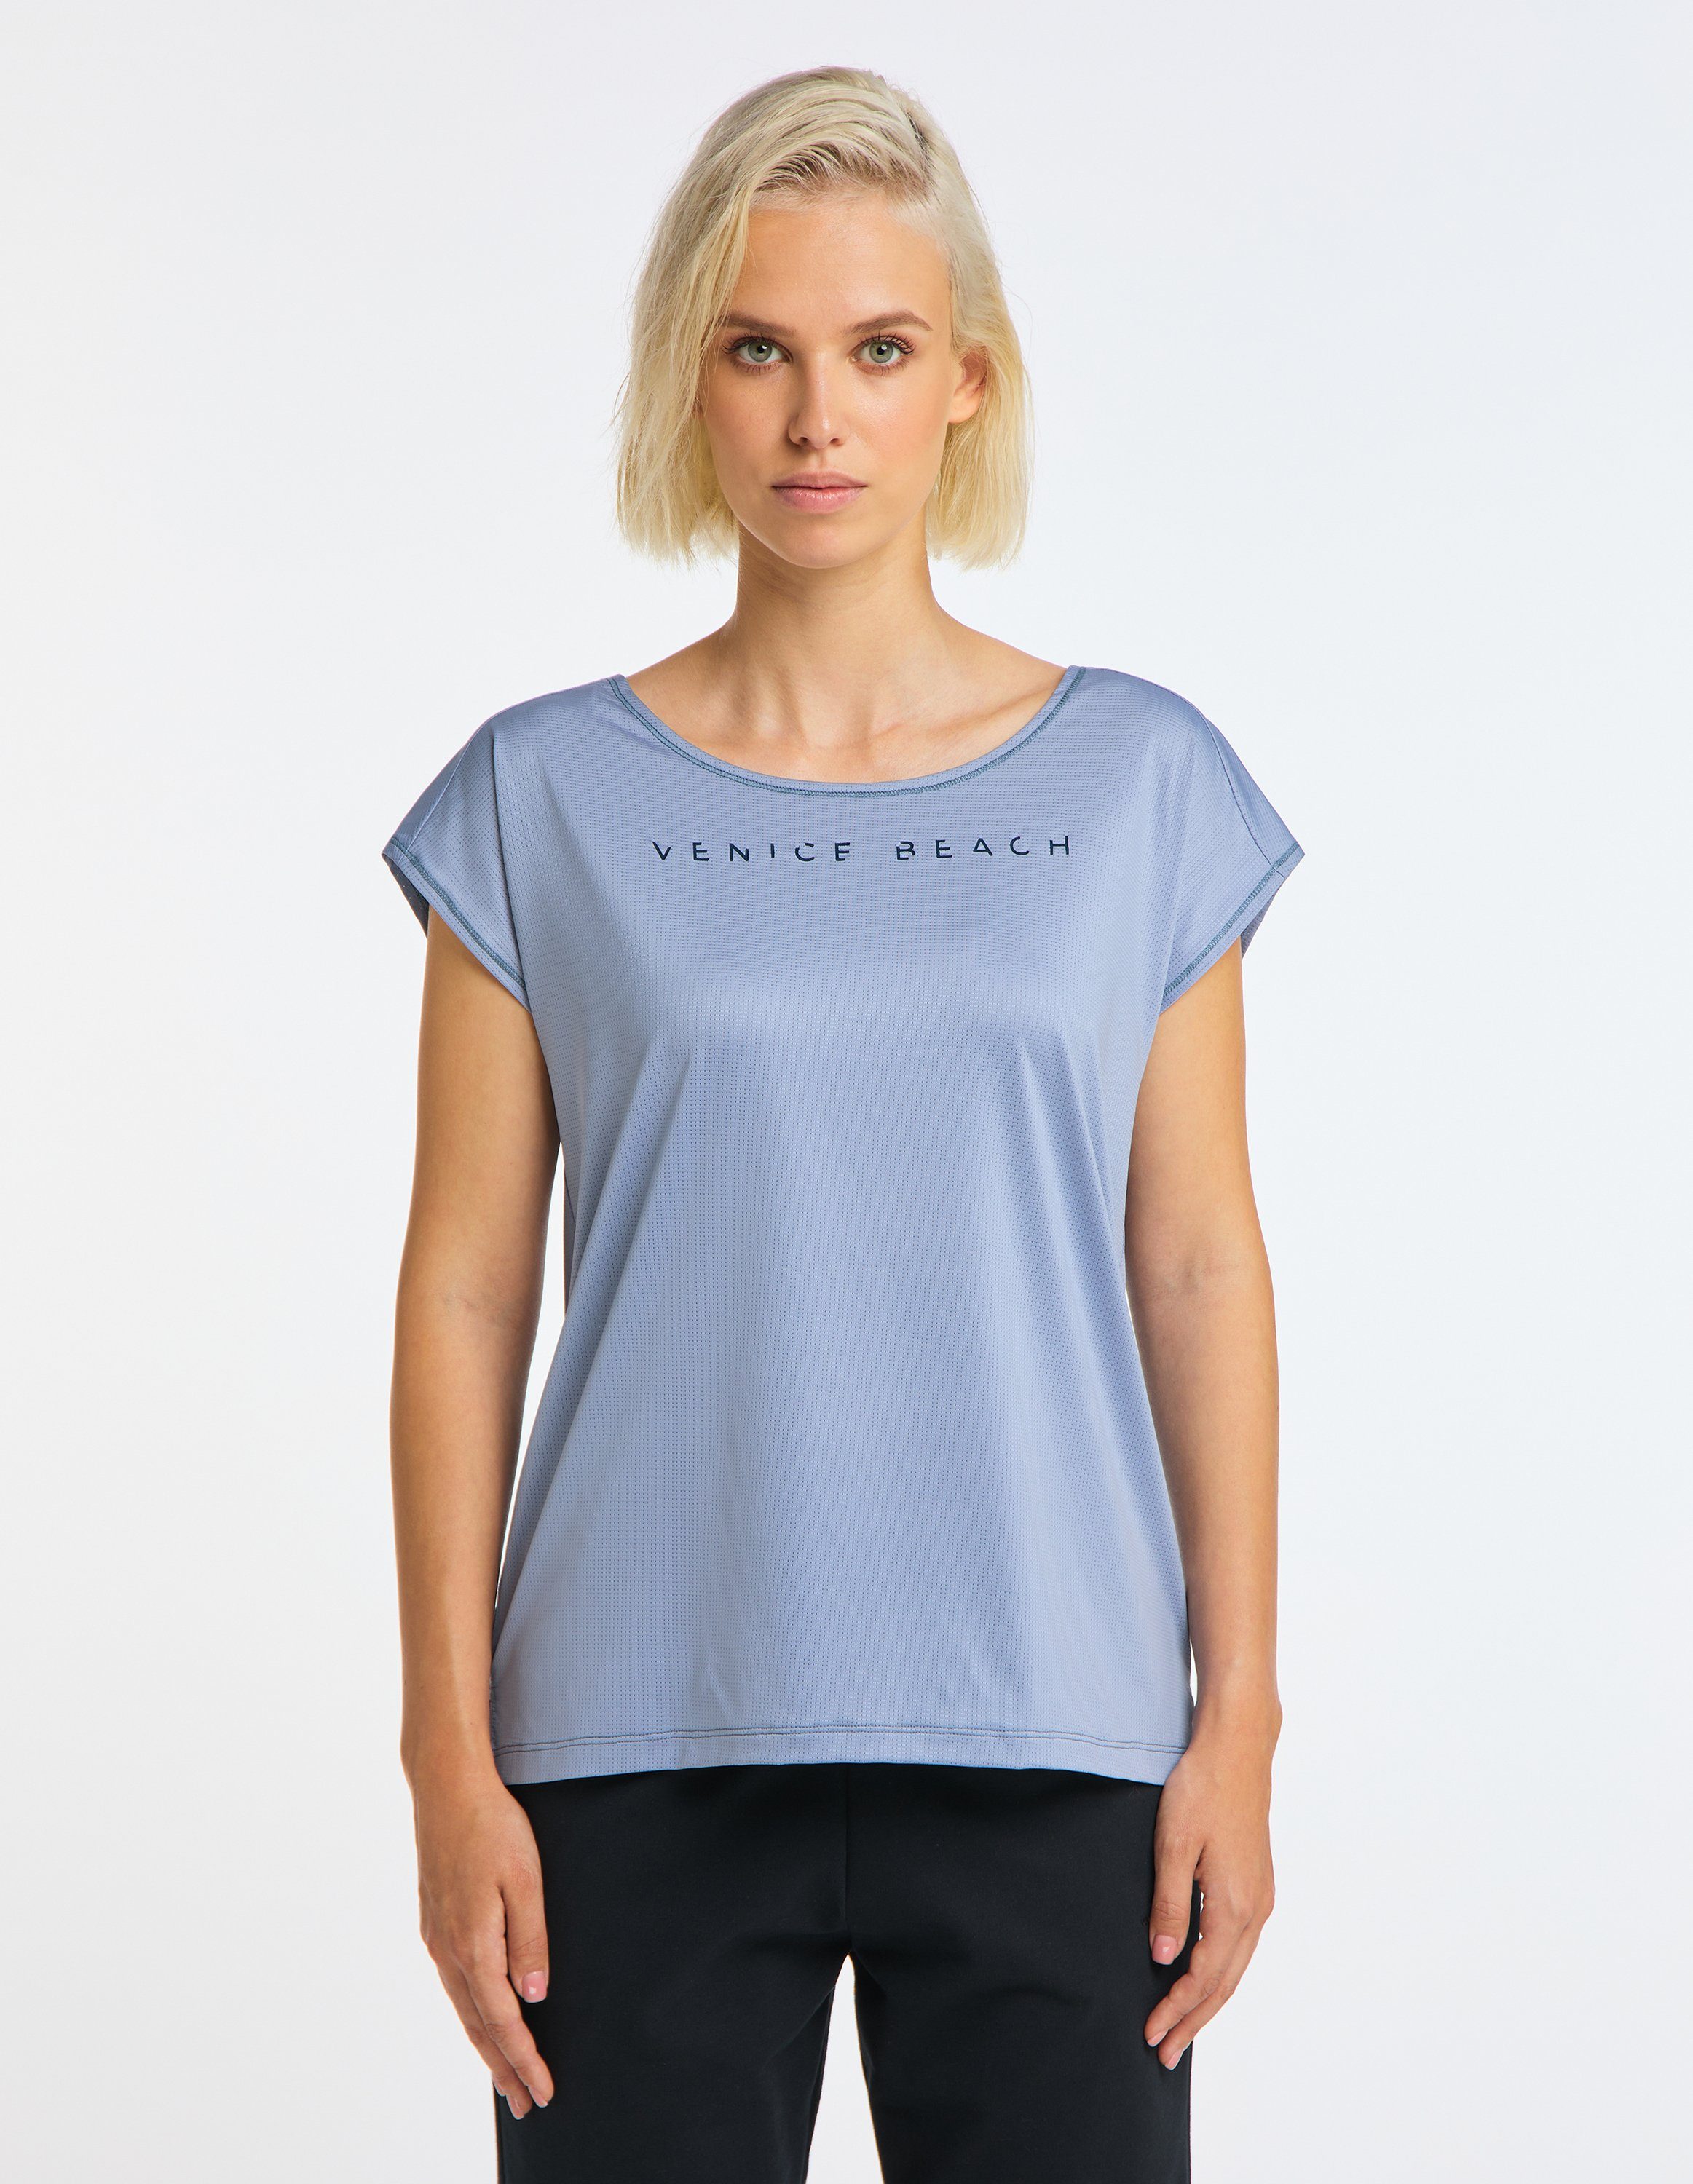 Venice Beach delft ALICE T-Shirt VB T-Shirt blue